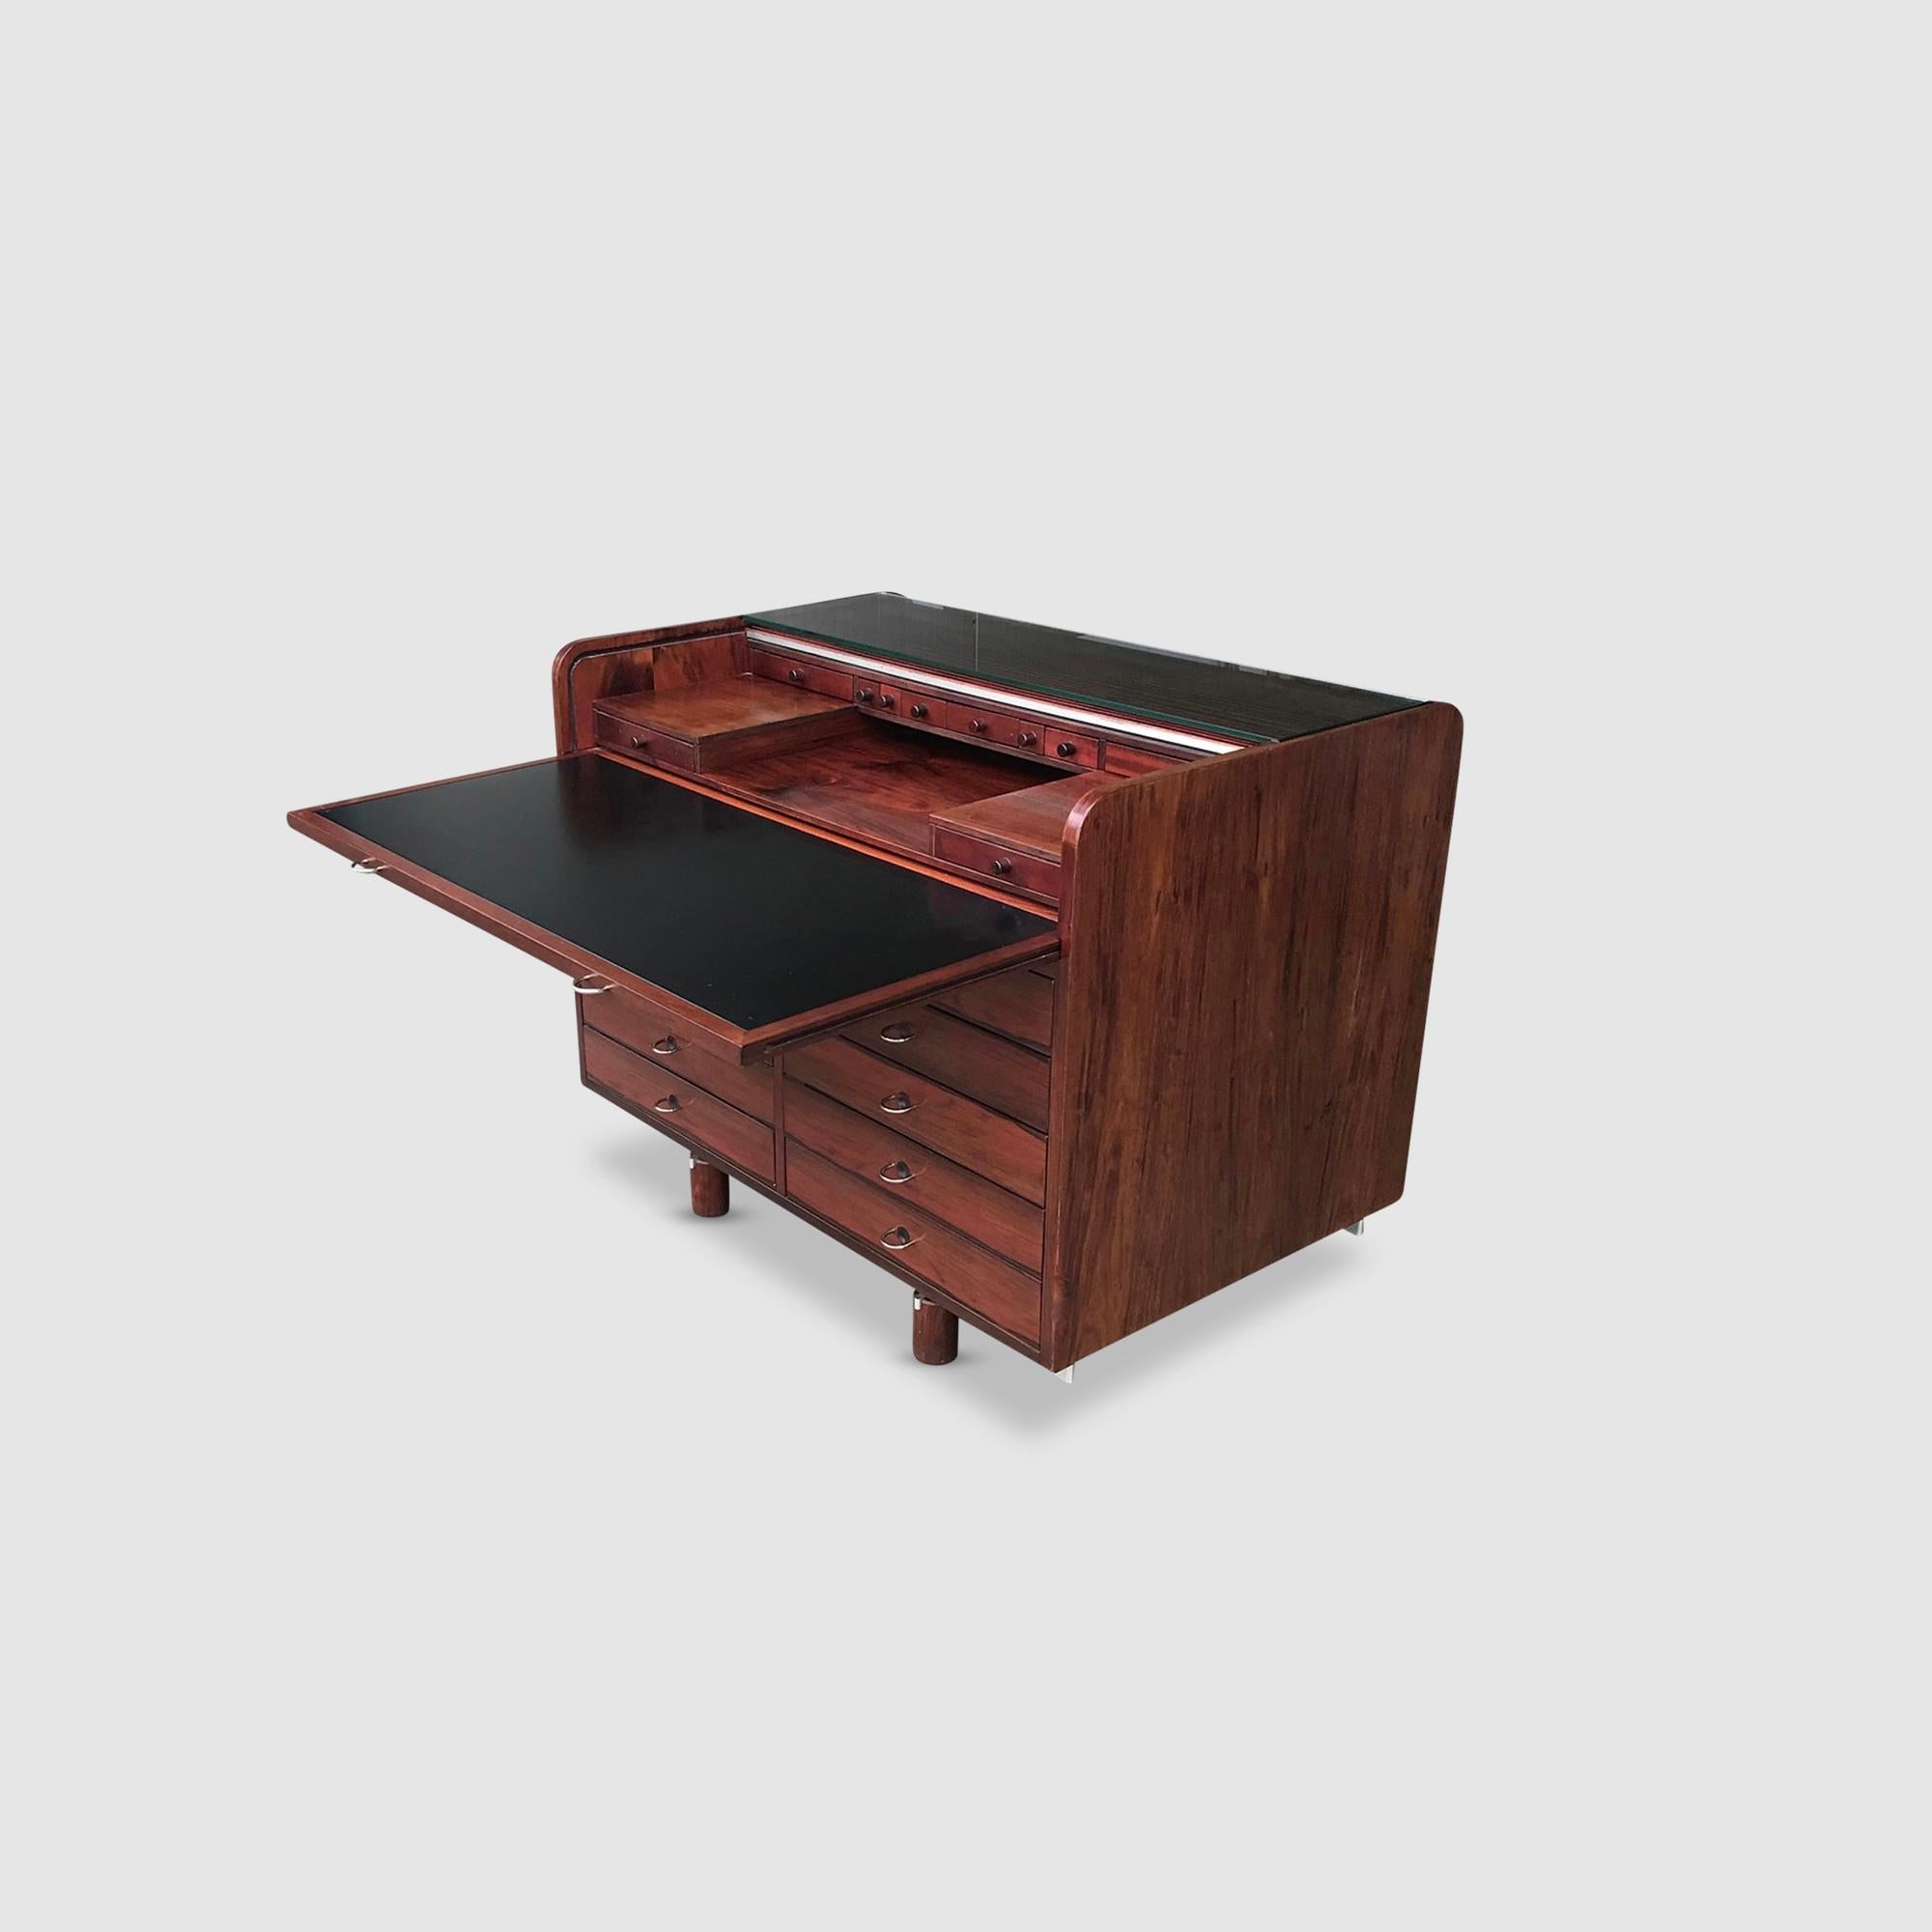 Italian 804 rosewood rolltop desk by Gianfranco Frattini for Bernini 1960s For Sale